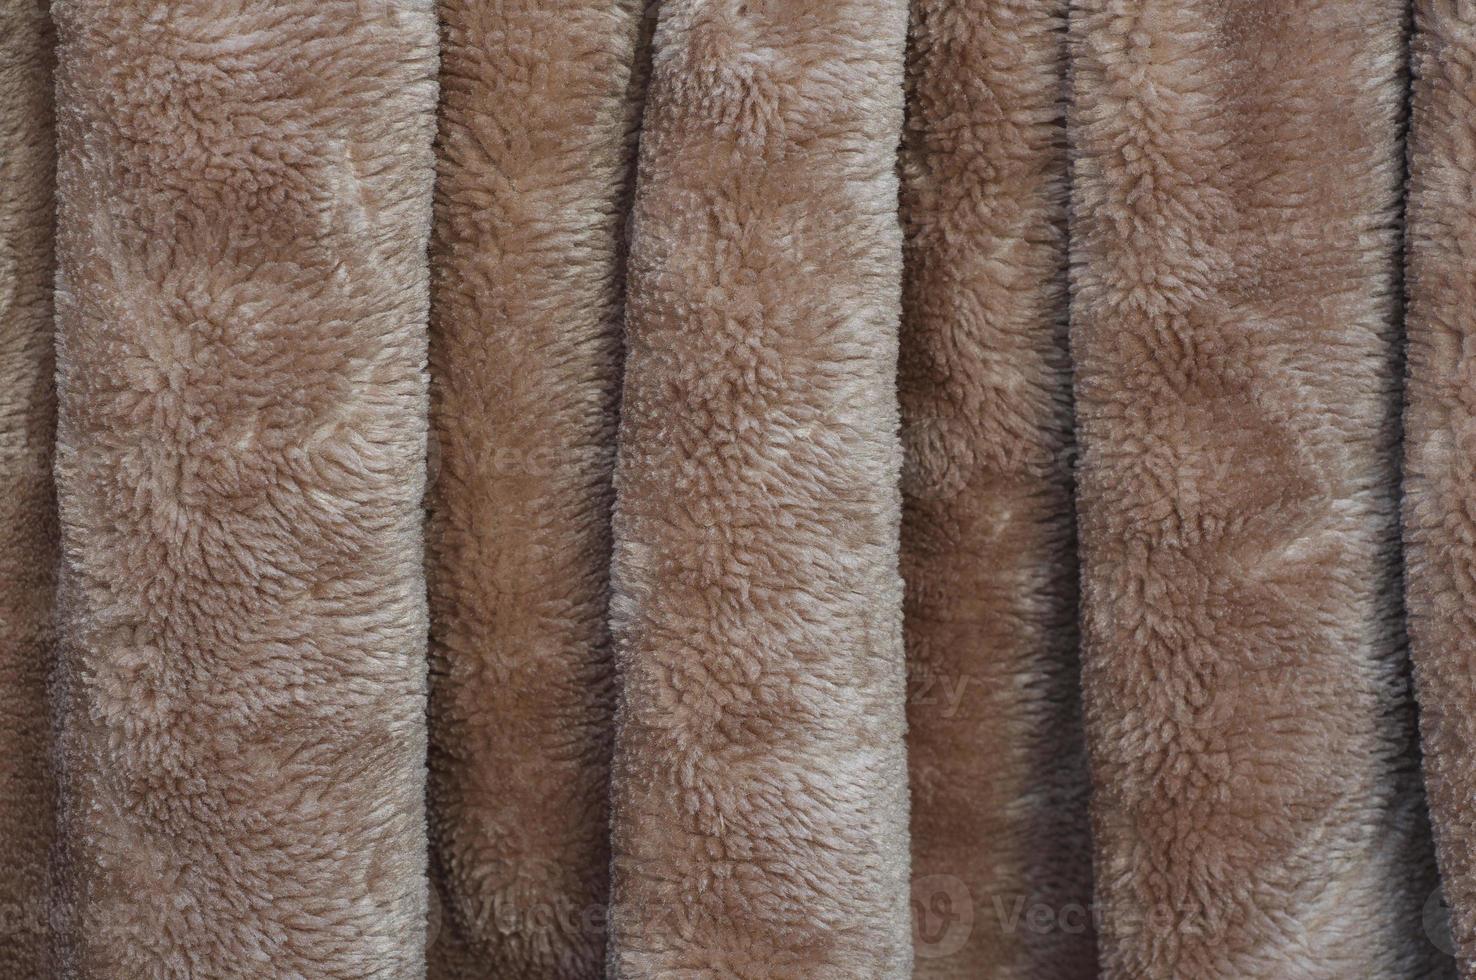 fleecy fabric texture photo